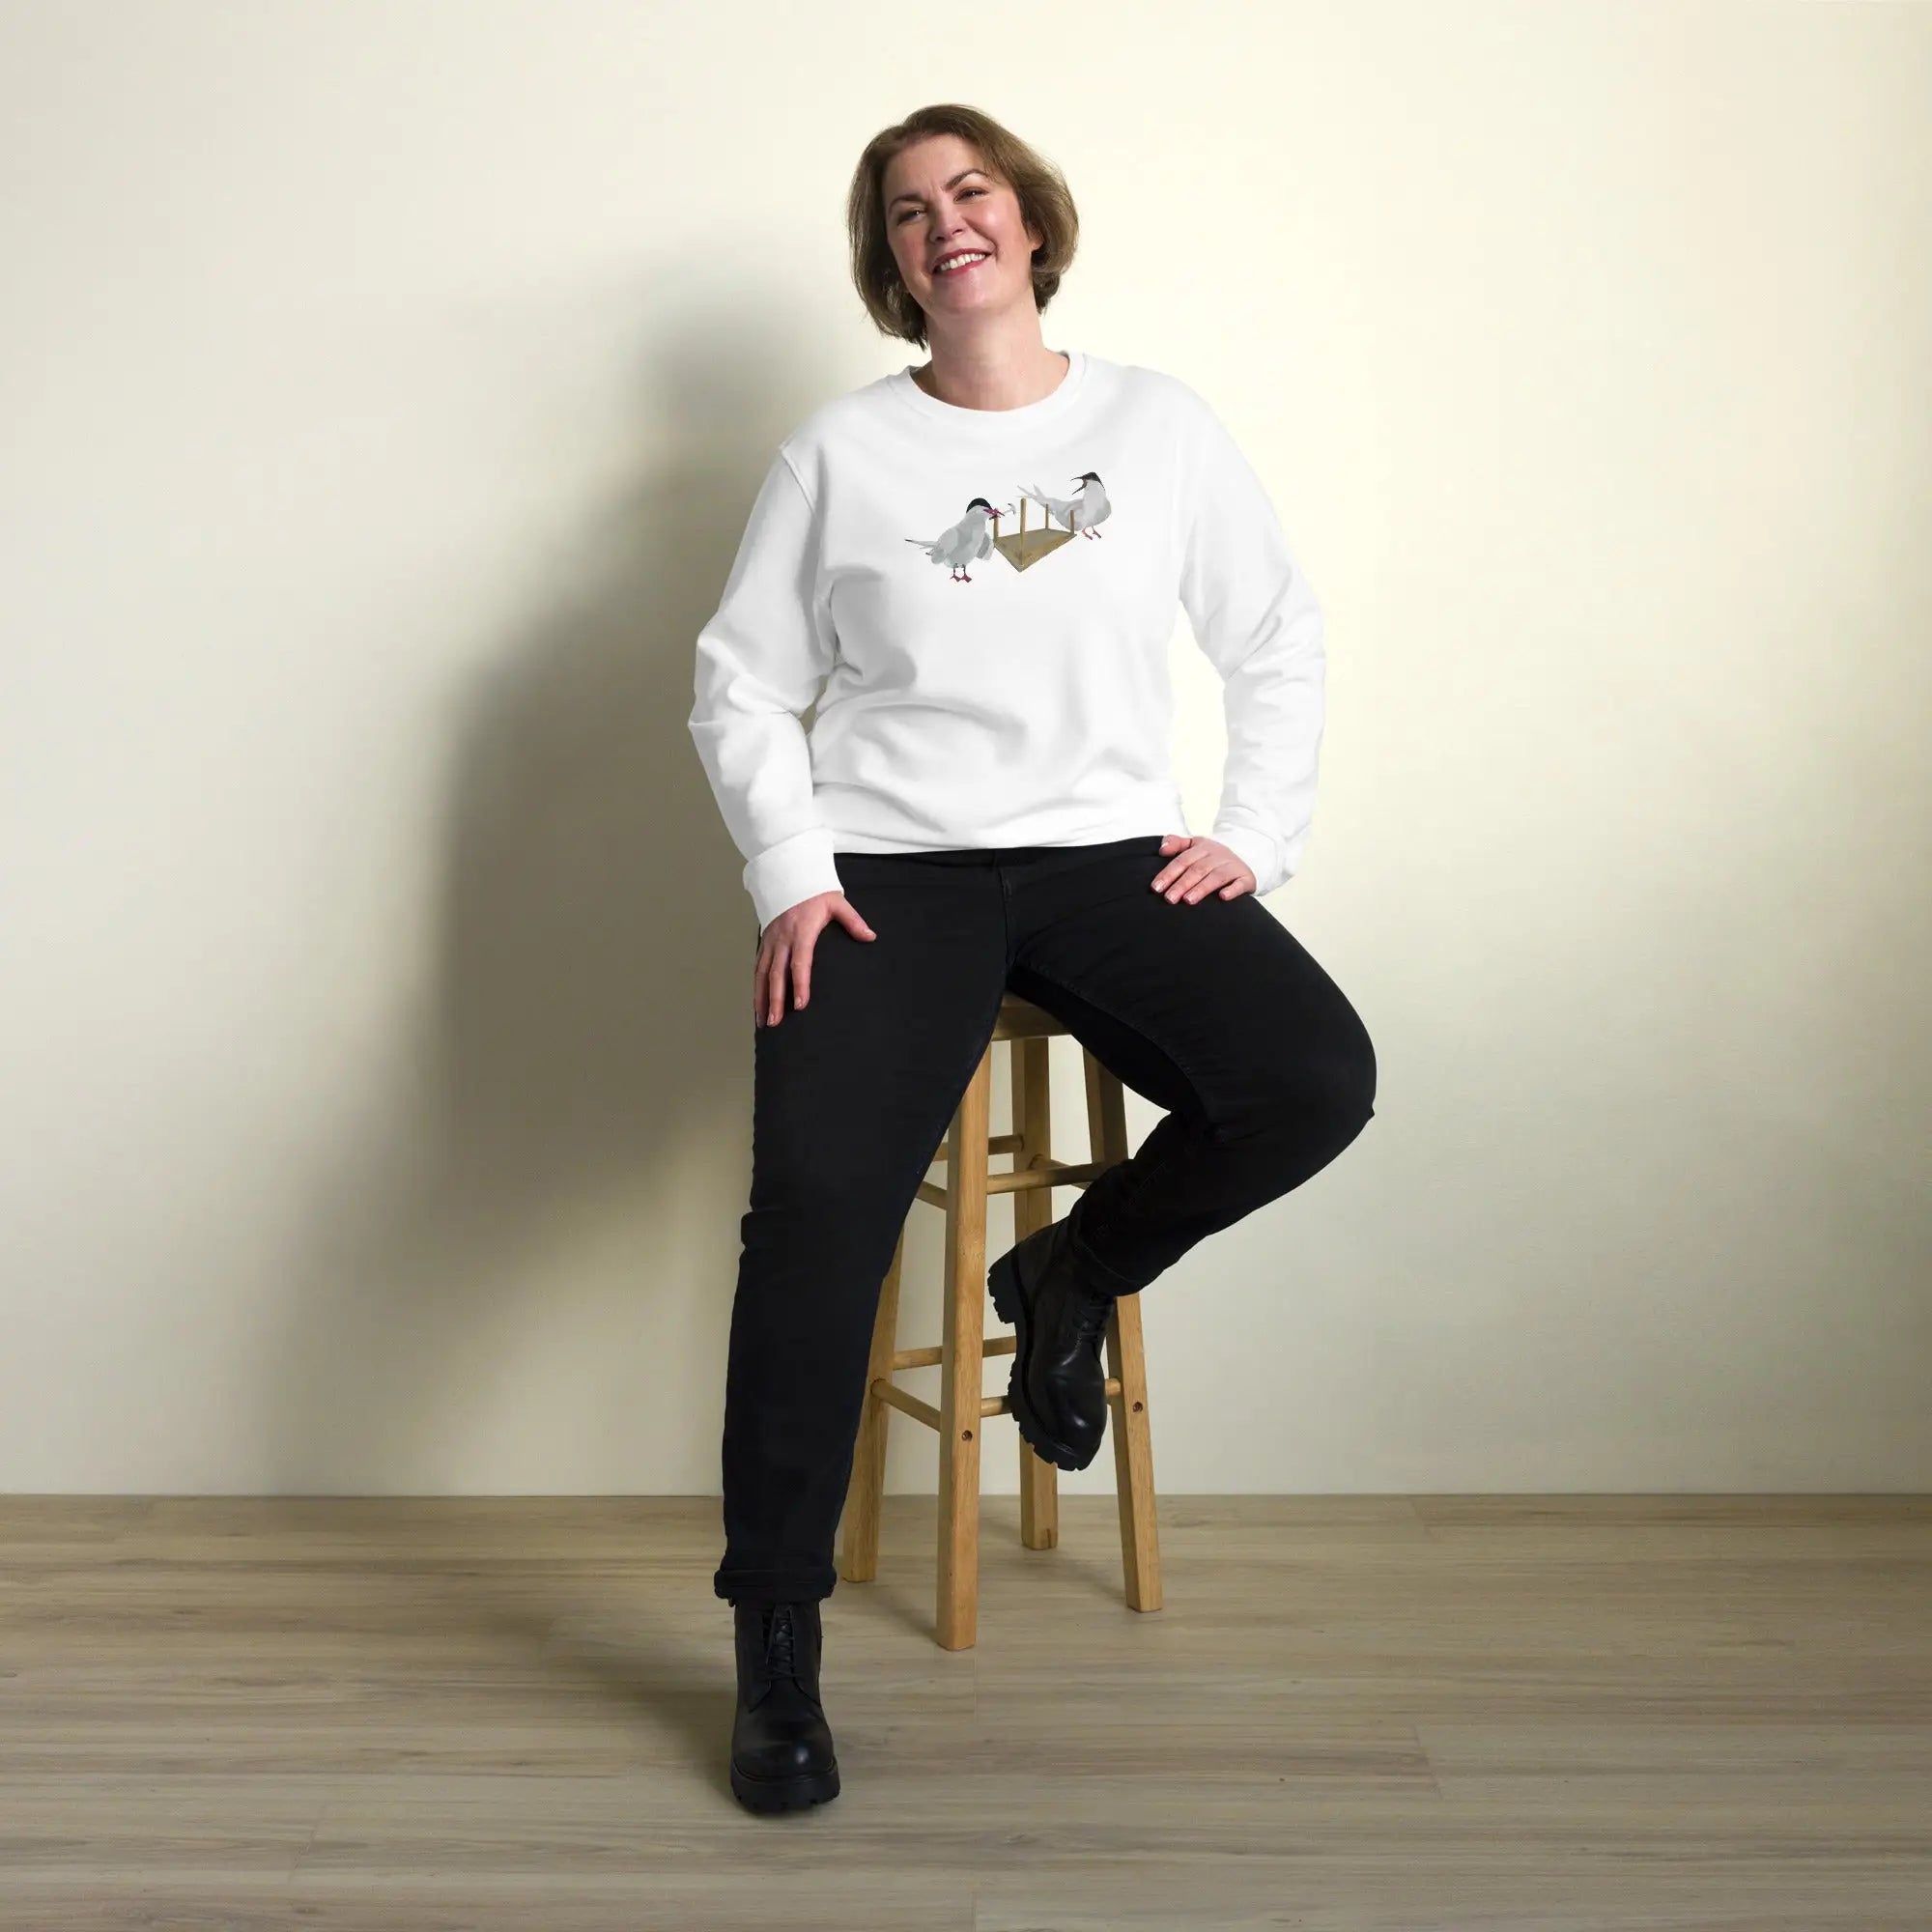 Organic Cotton Sweatshirt - Woman in White Sweatshirt sitting on stool